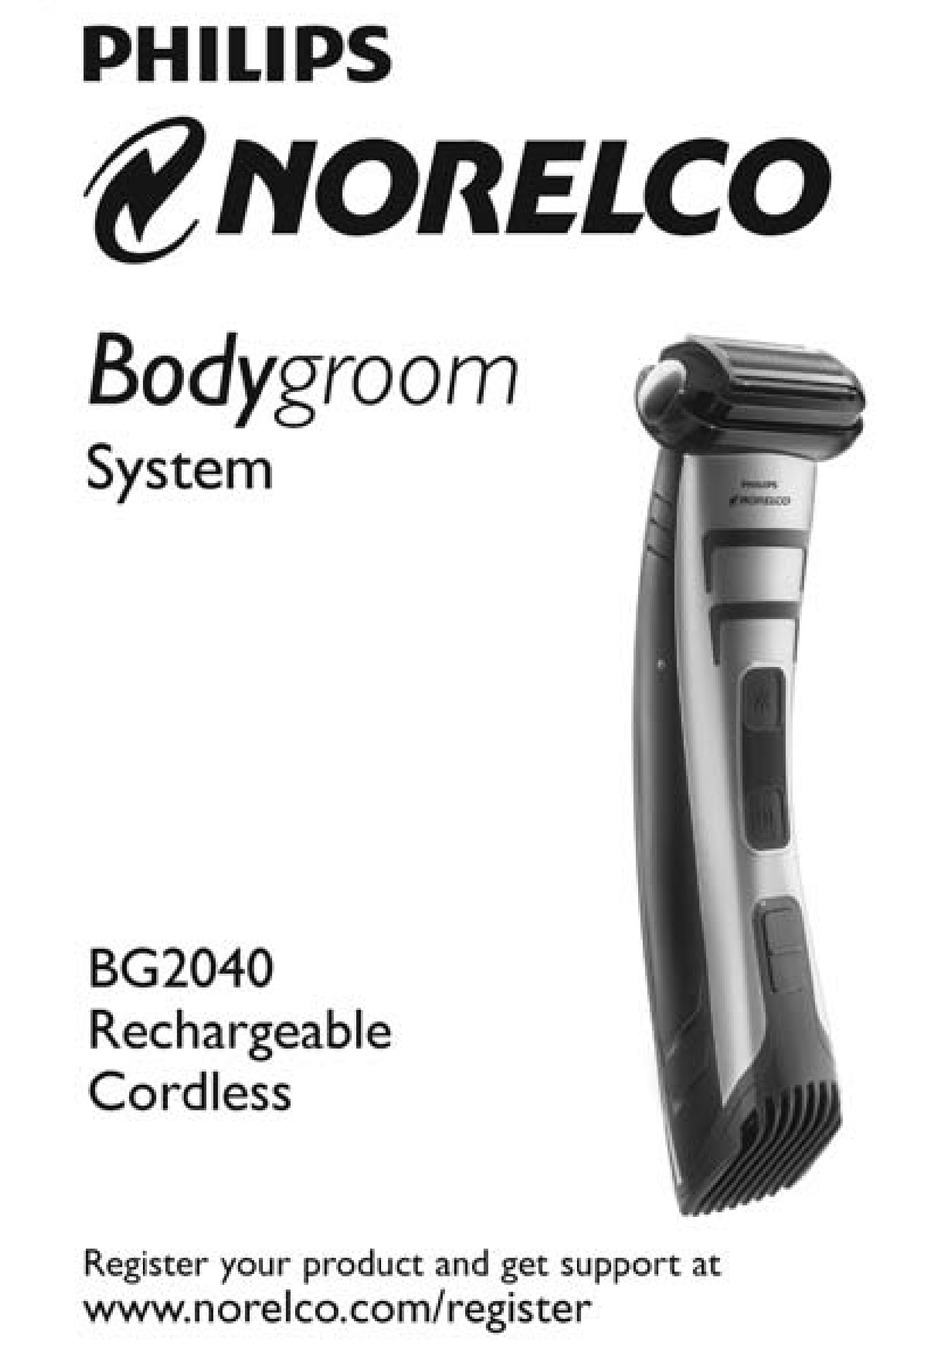 philips norelco bodygroom 7100 manual